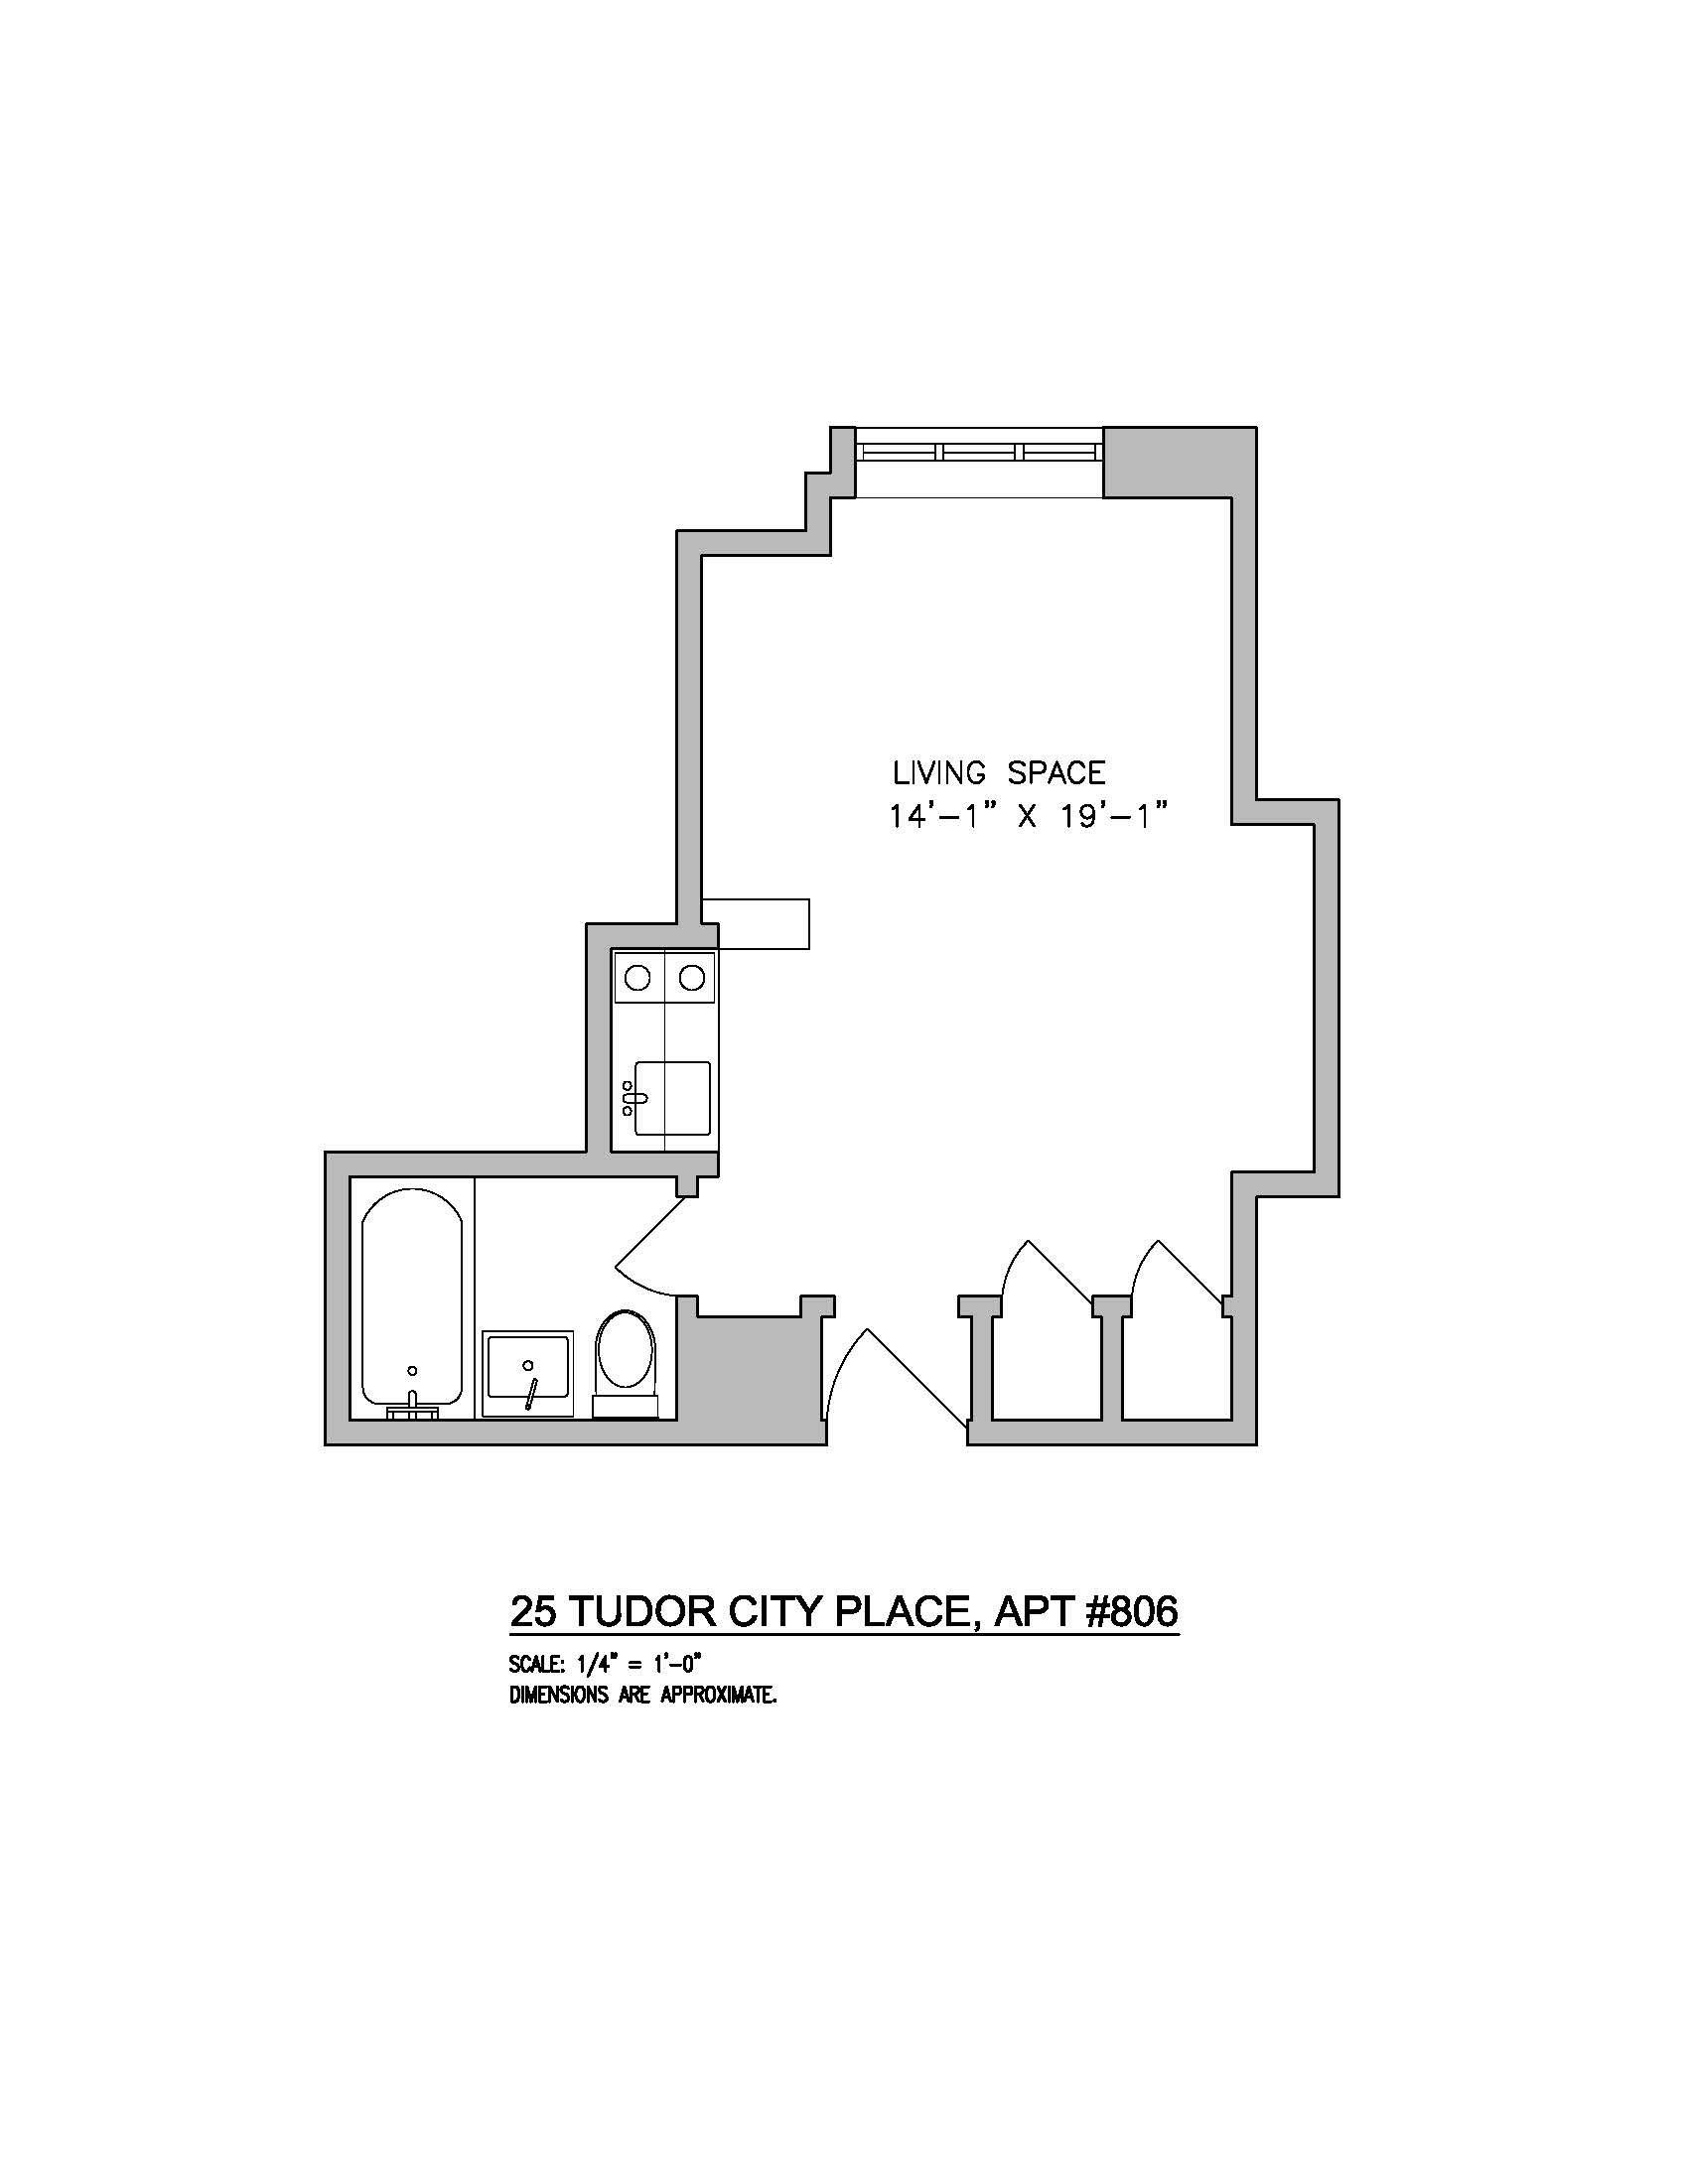 Floorplan for 25 Tudor City Place, 806